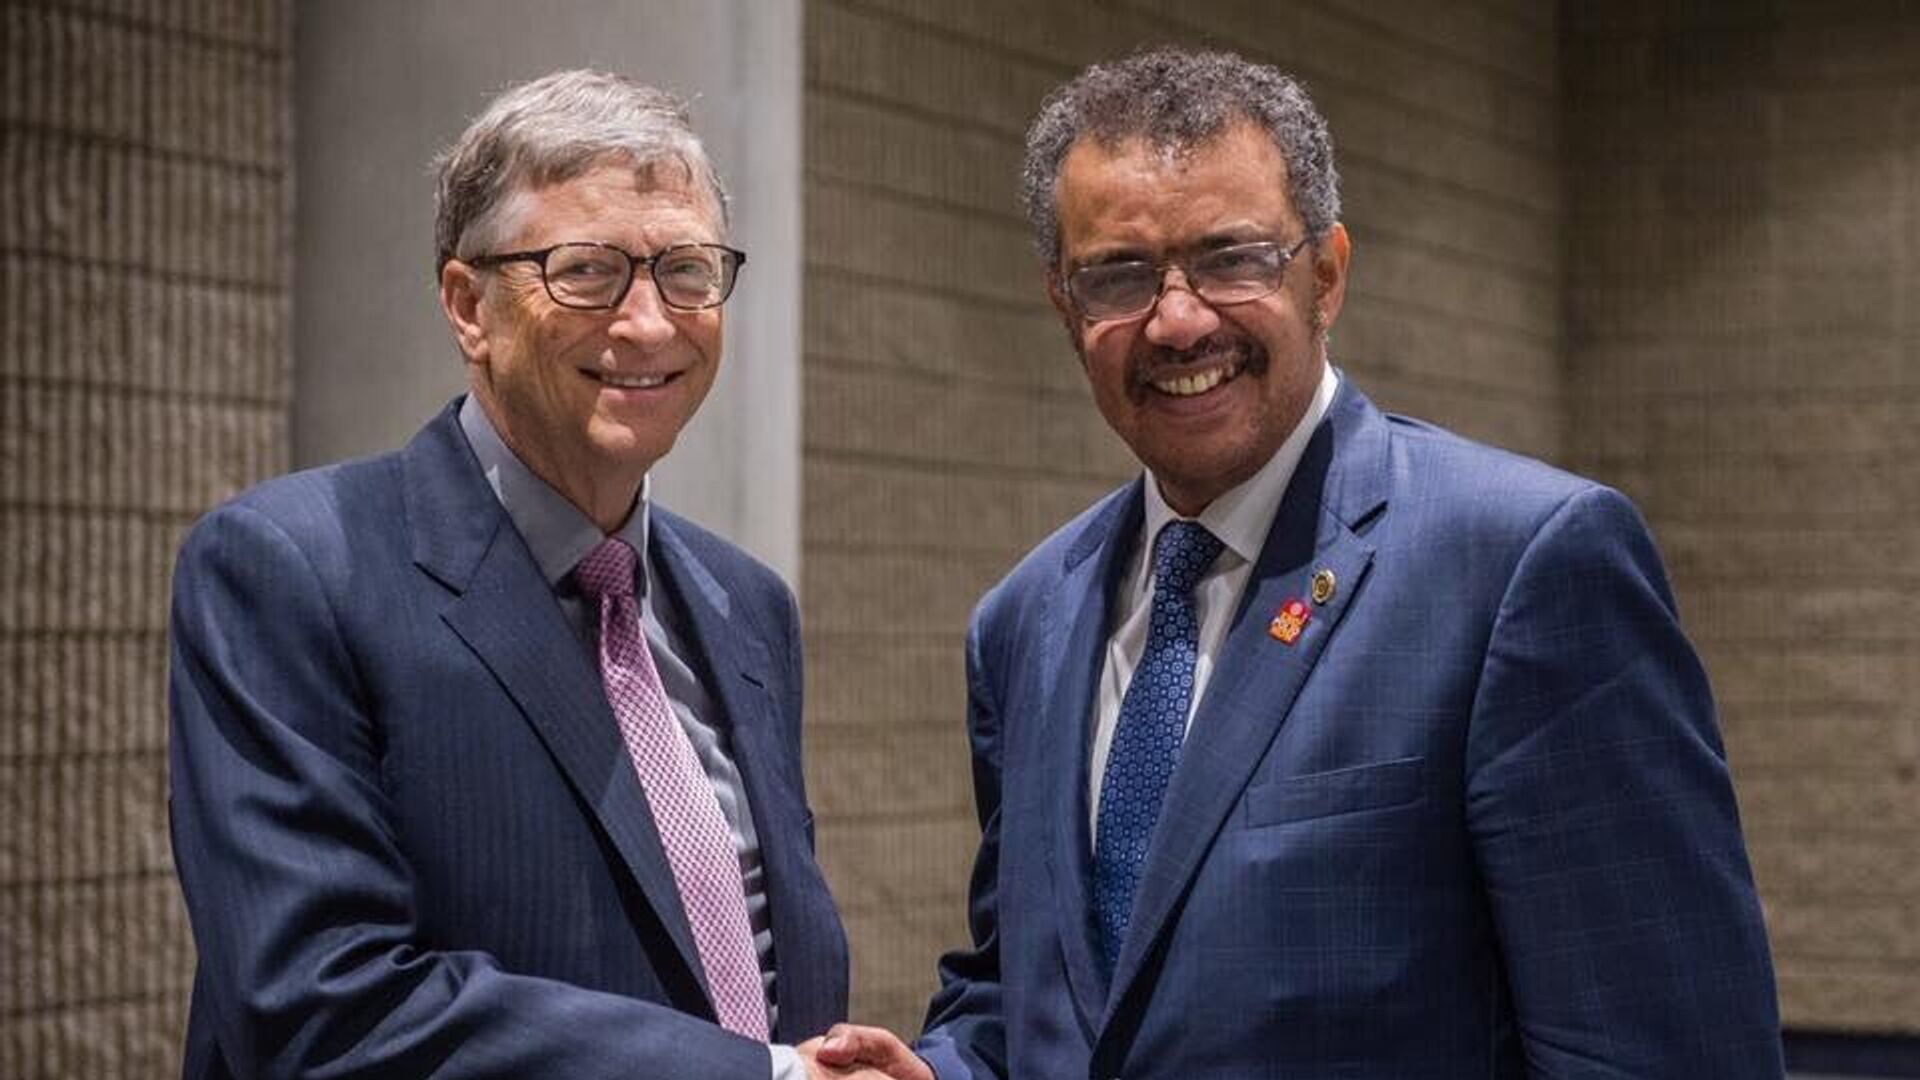 Microsoft founder and Gates Foundation director Bill Gates meeting with WHO chief Dr. Tedros Adhanom Ghebreyesus in 2017 - Sputnik International, 1920, 18.04.2022